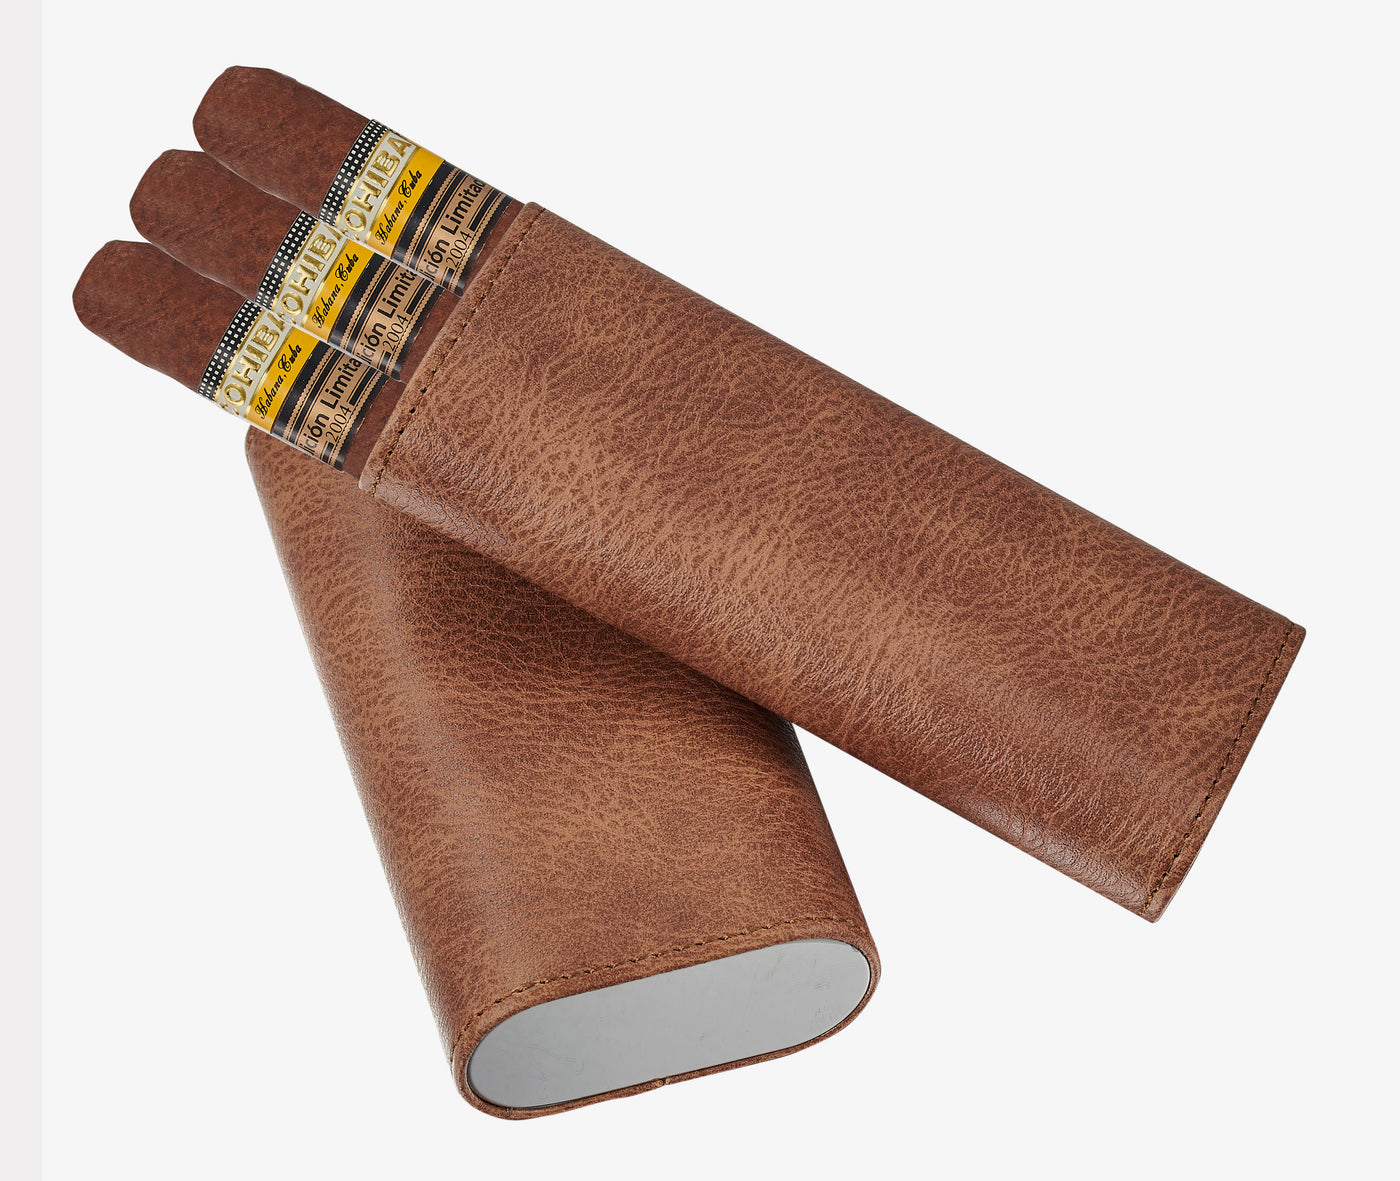 Visol Arnoldo Genuine Leather Cigar Case - Holds 4 Cigars